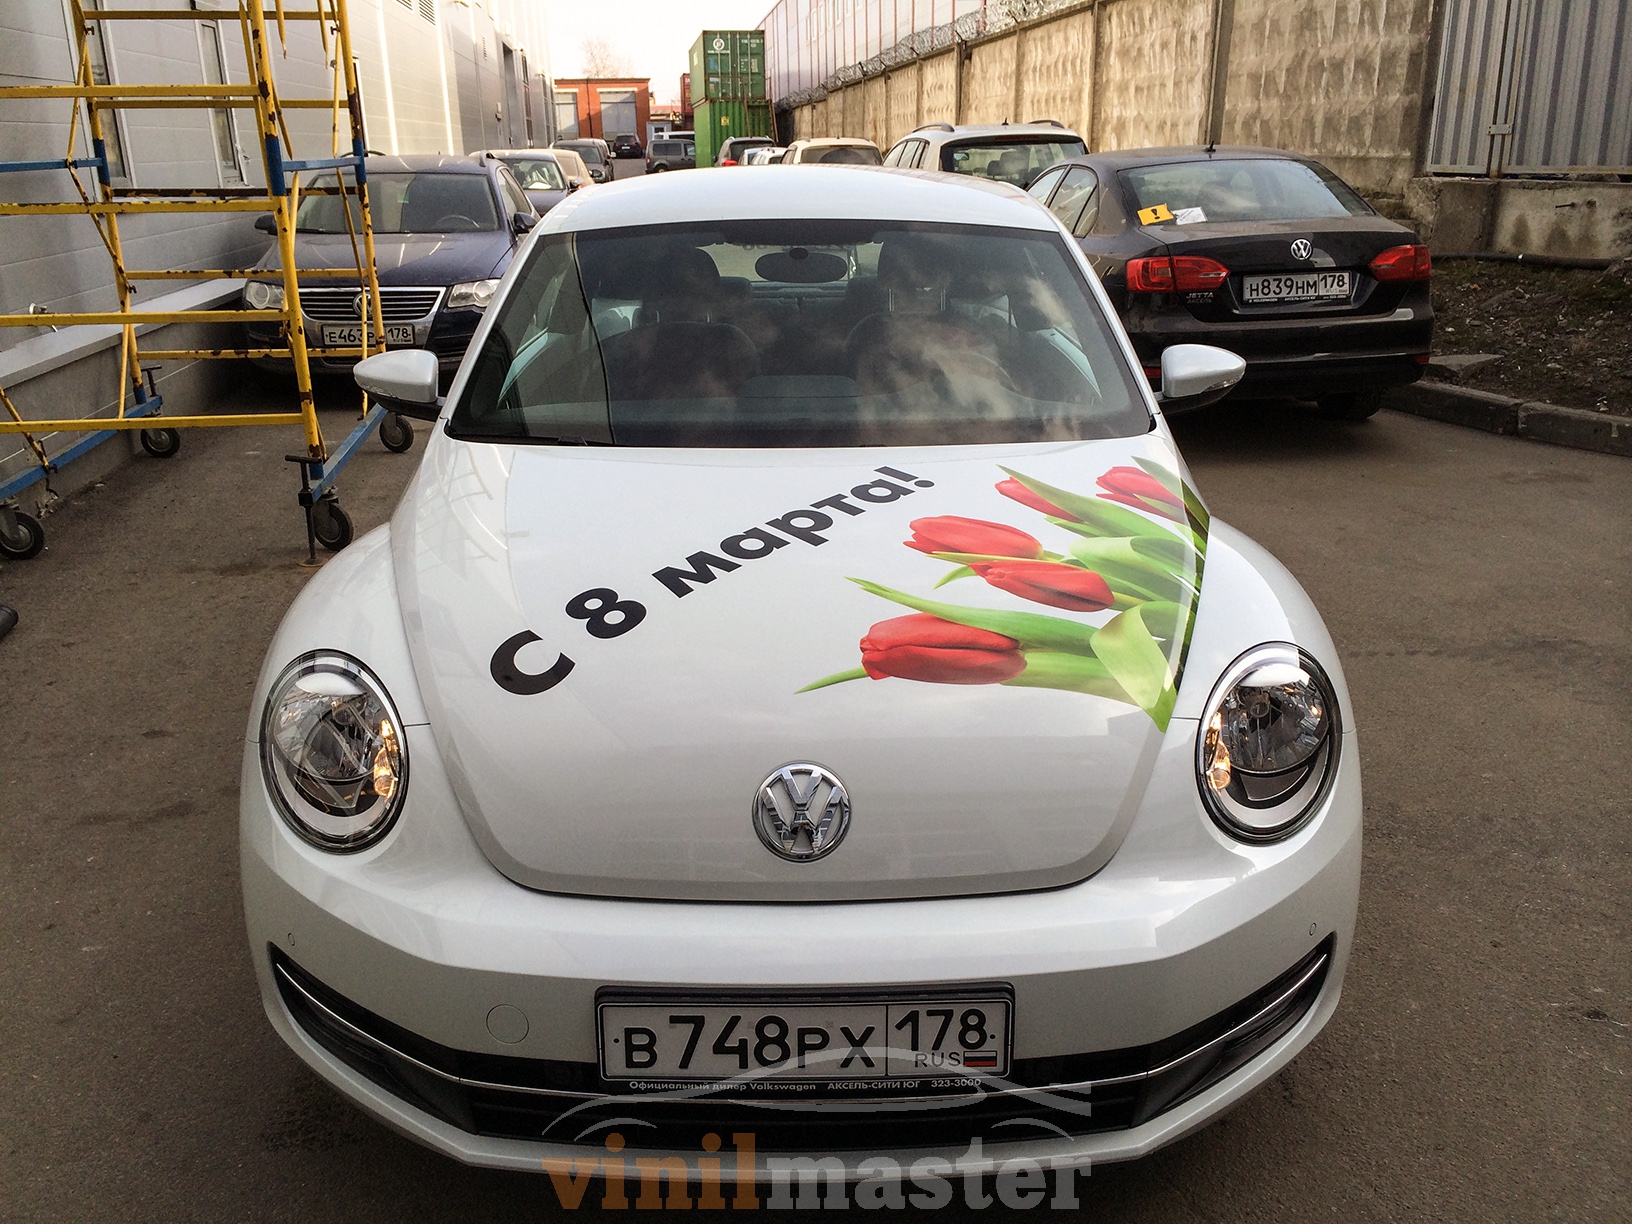 Брендирование Volkswagen Beetle для Аксель-Сити